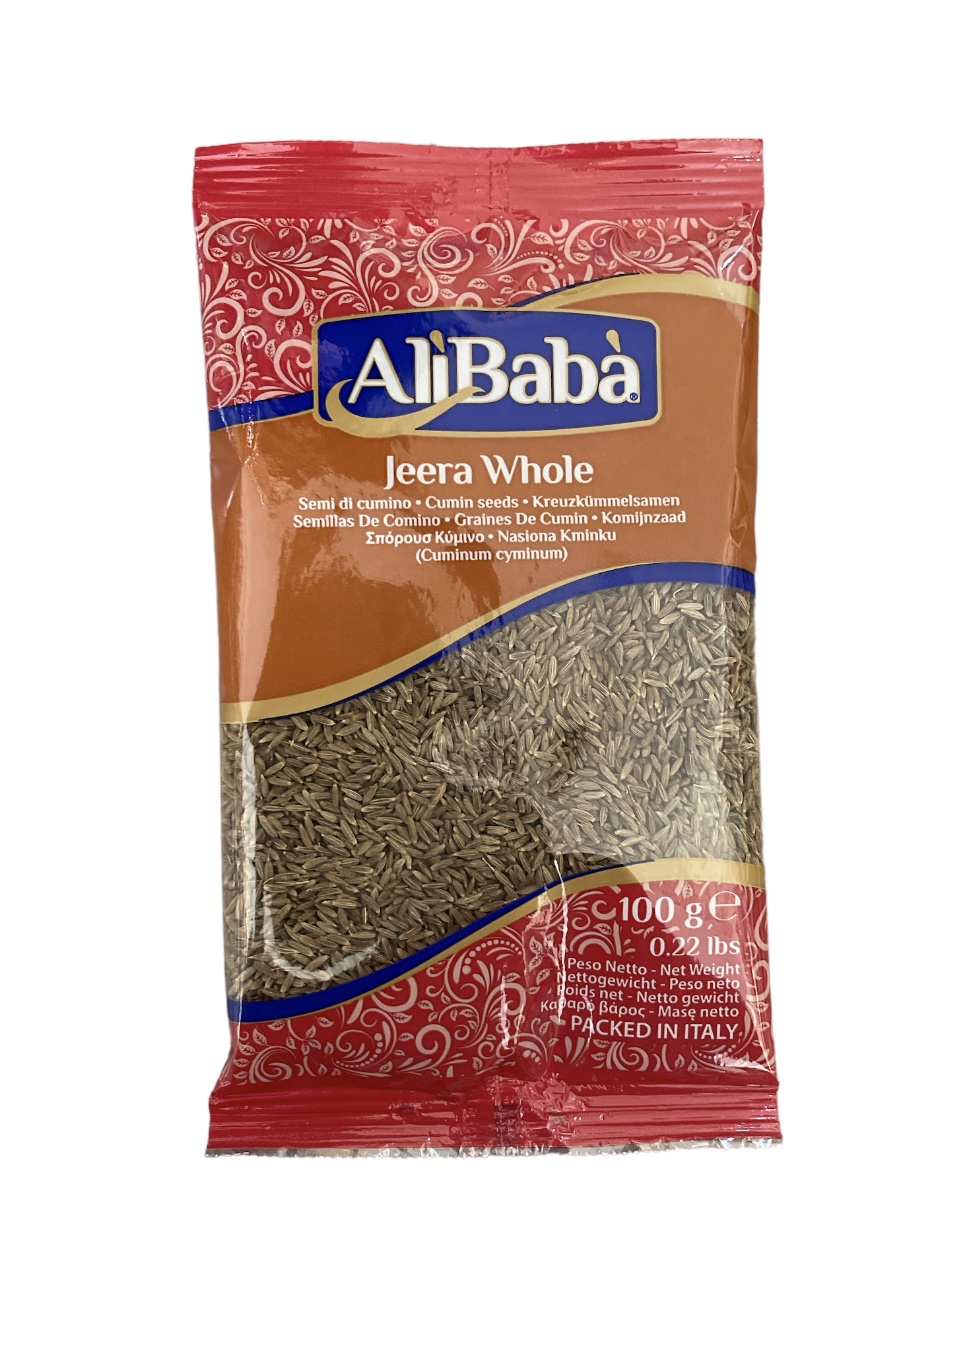 Ali Baba Jeera Whole (Cumin Seeds) 100g